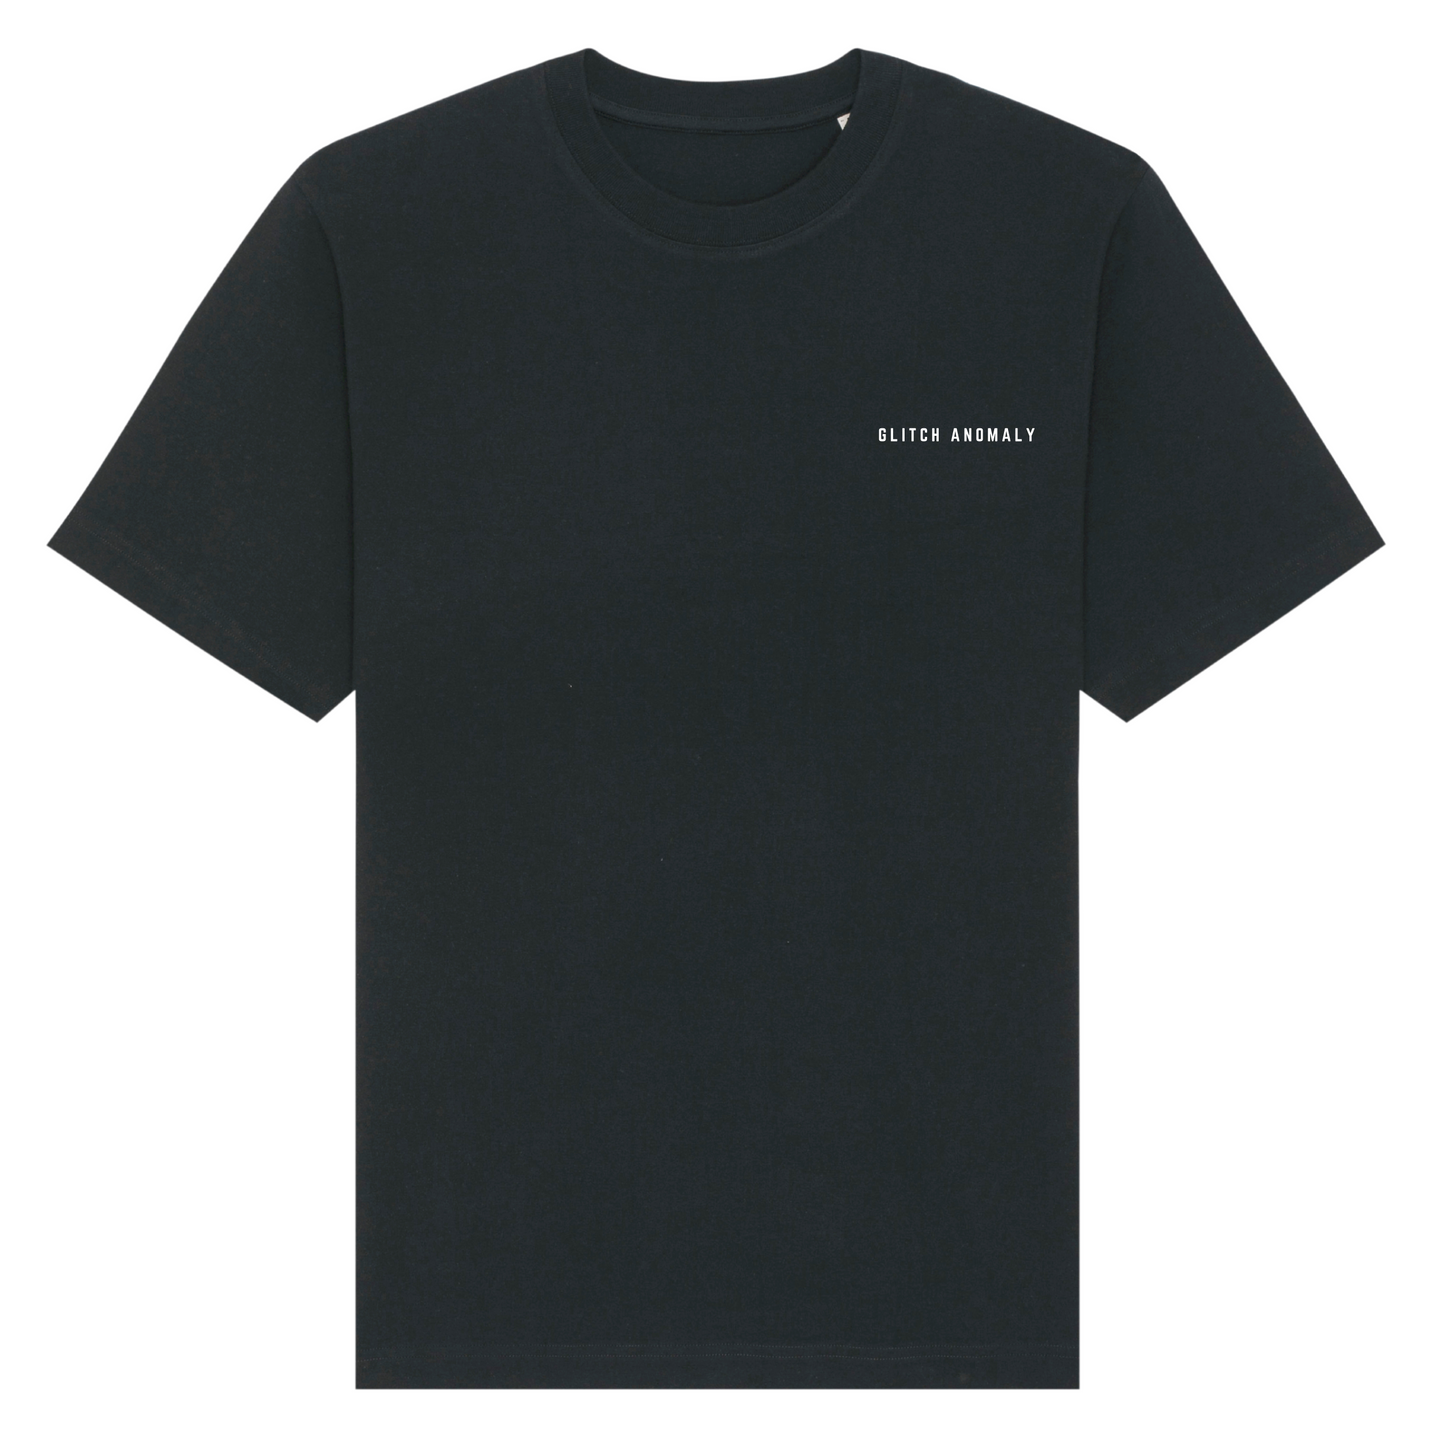 Bio-Degradable T-Shirt Reversed Print (White Background)